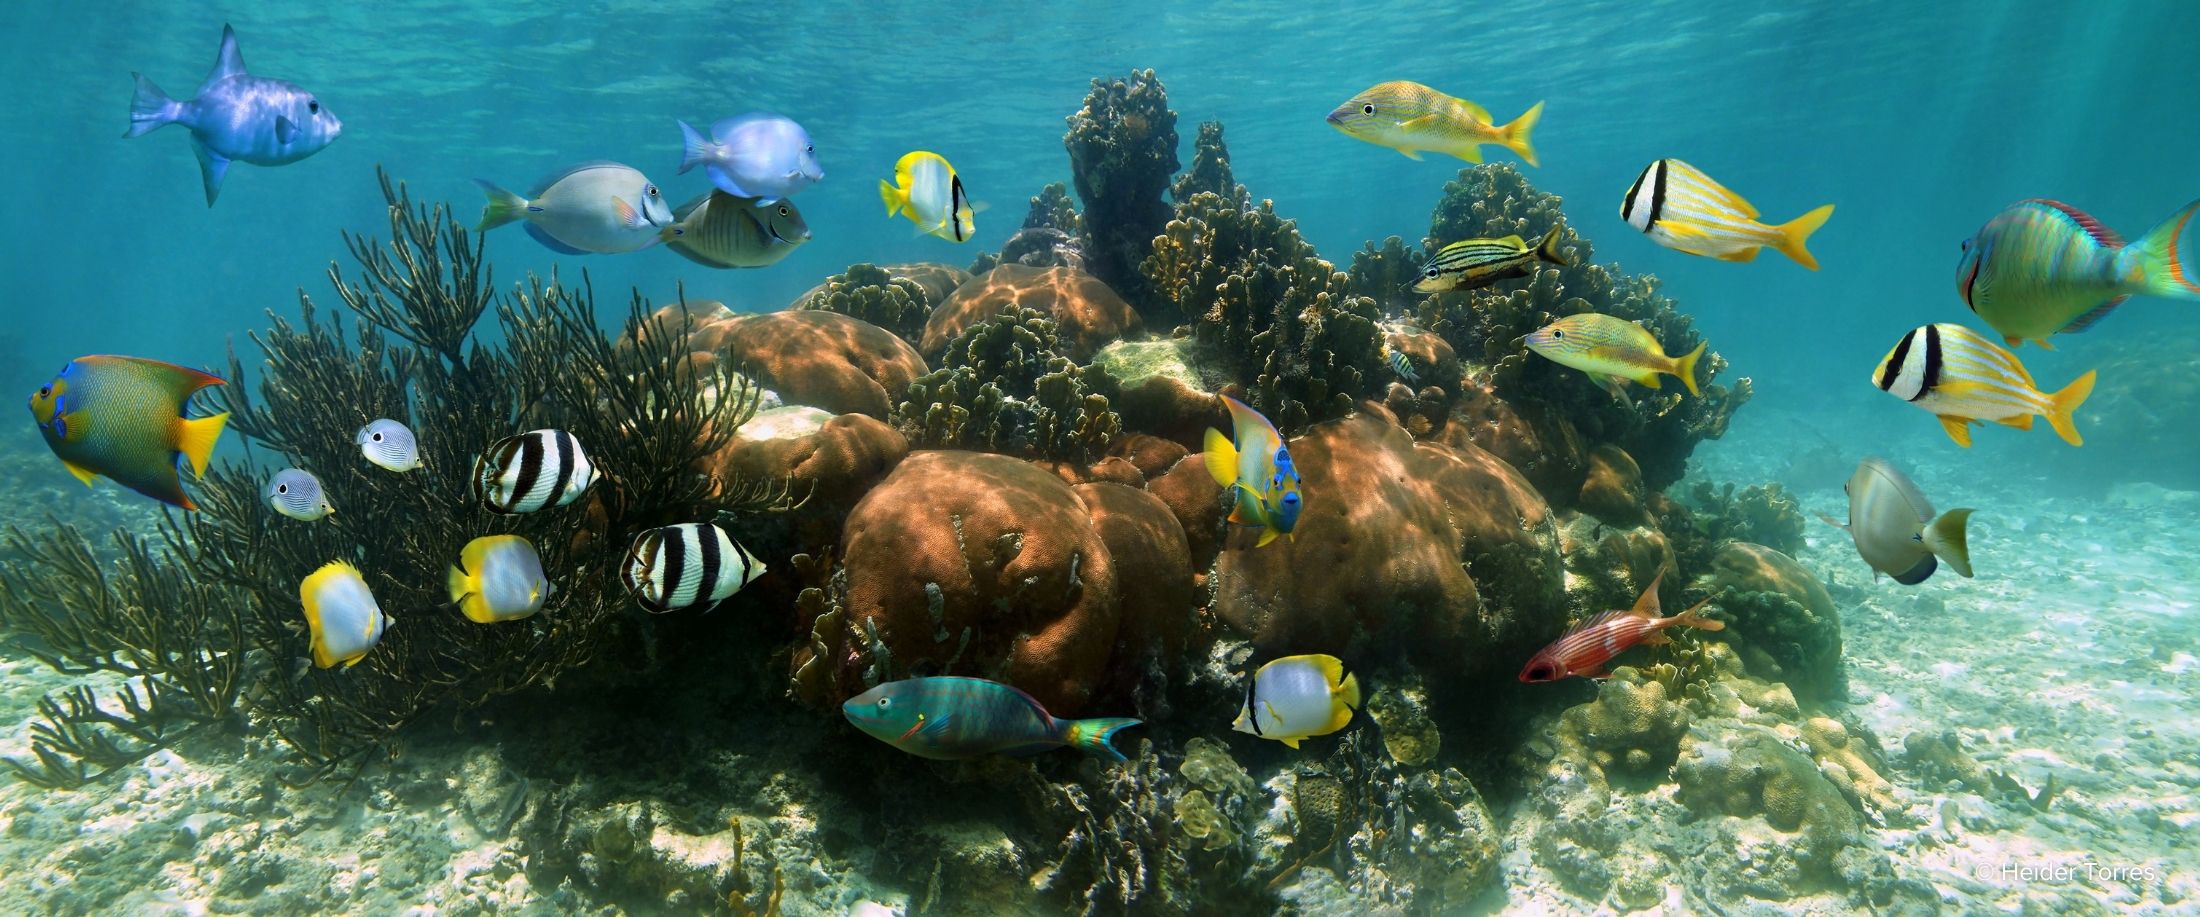 Tropical fish swim through a coral reef in the Caribbean Sea